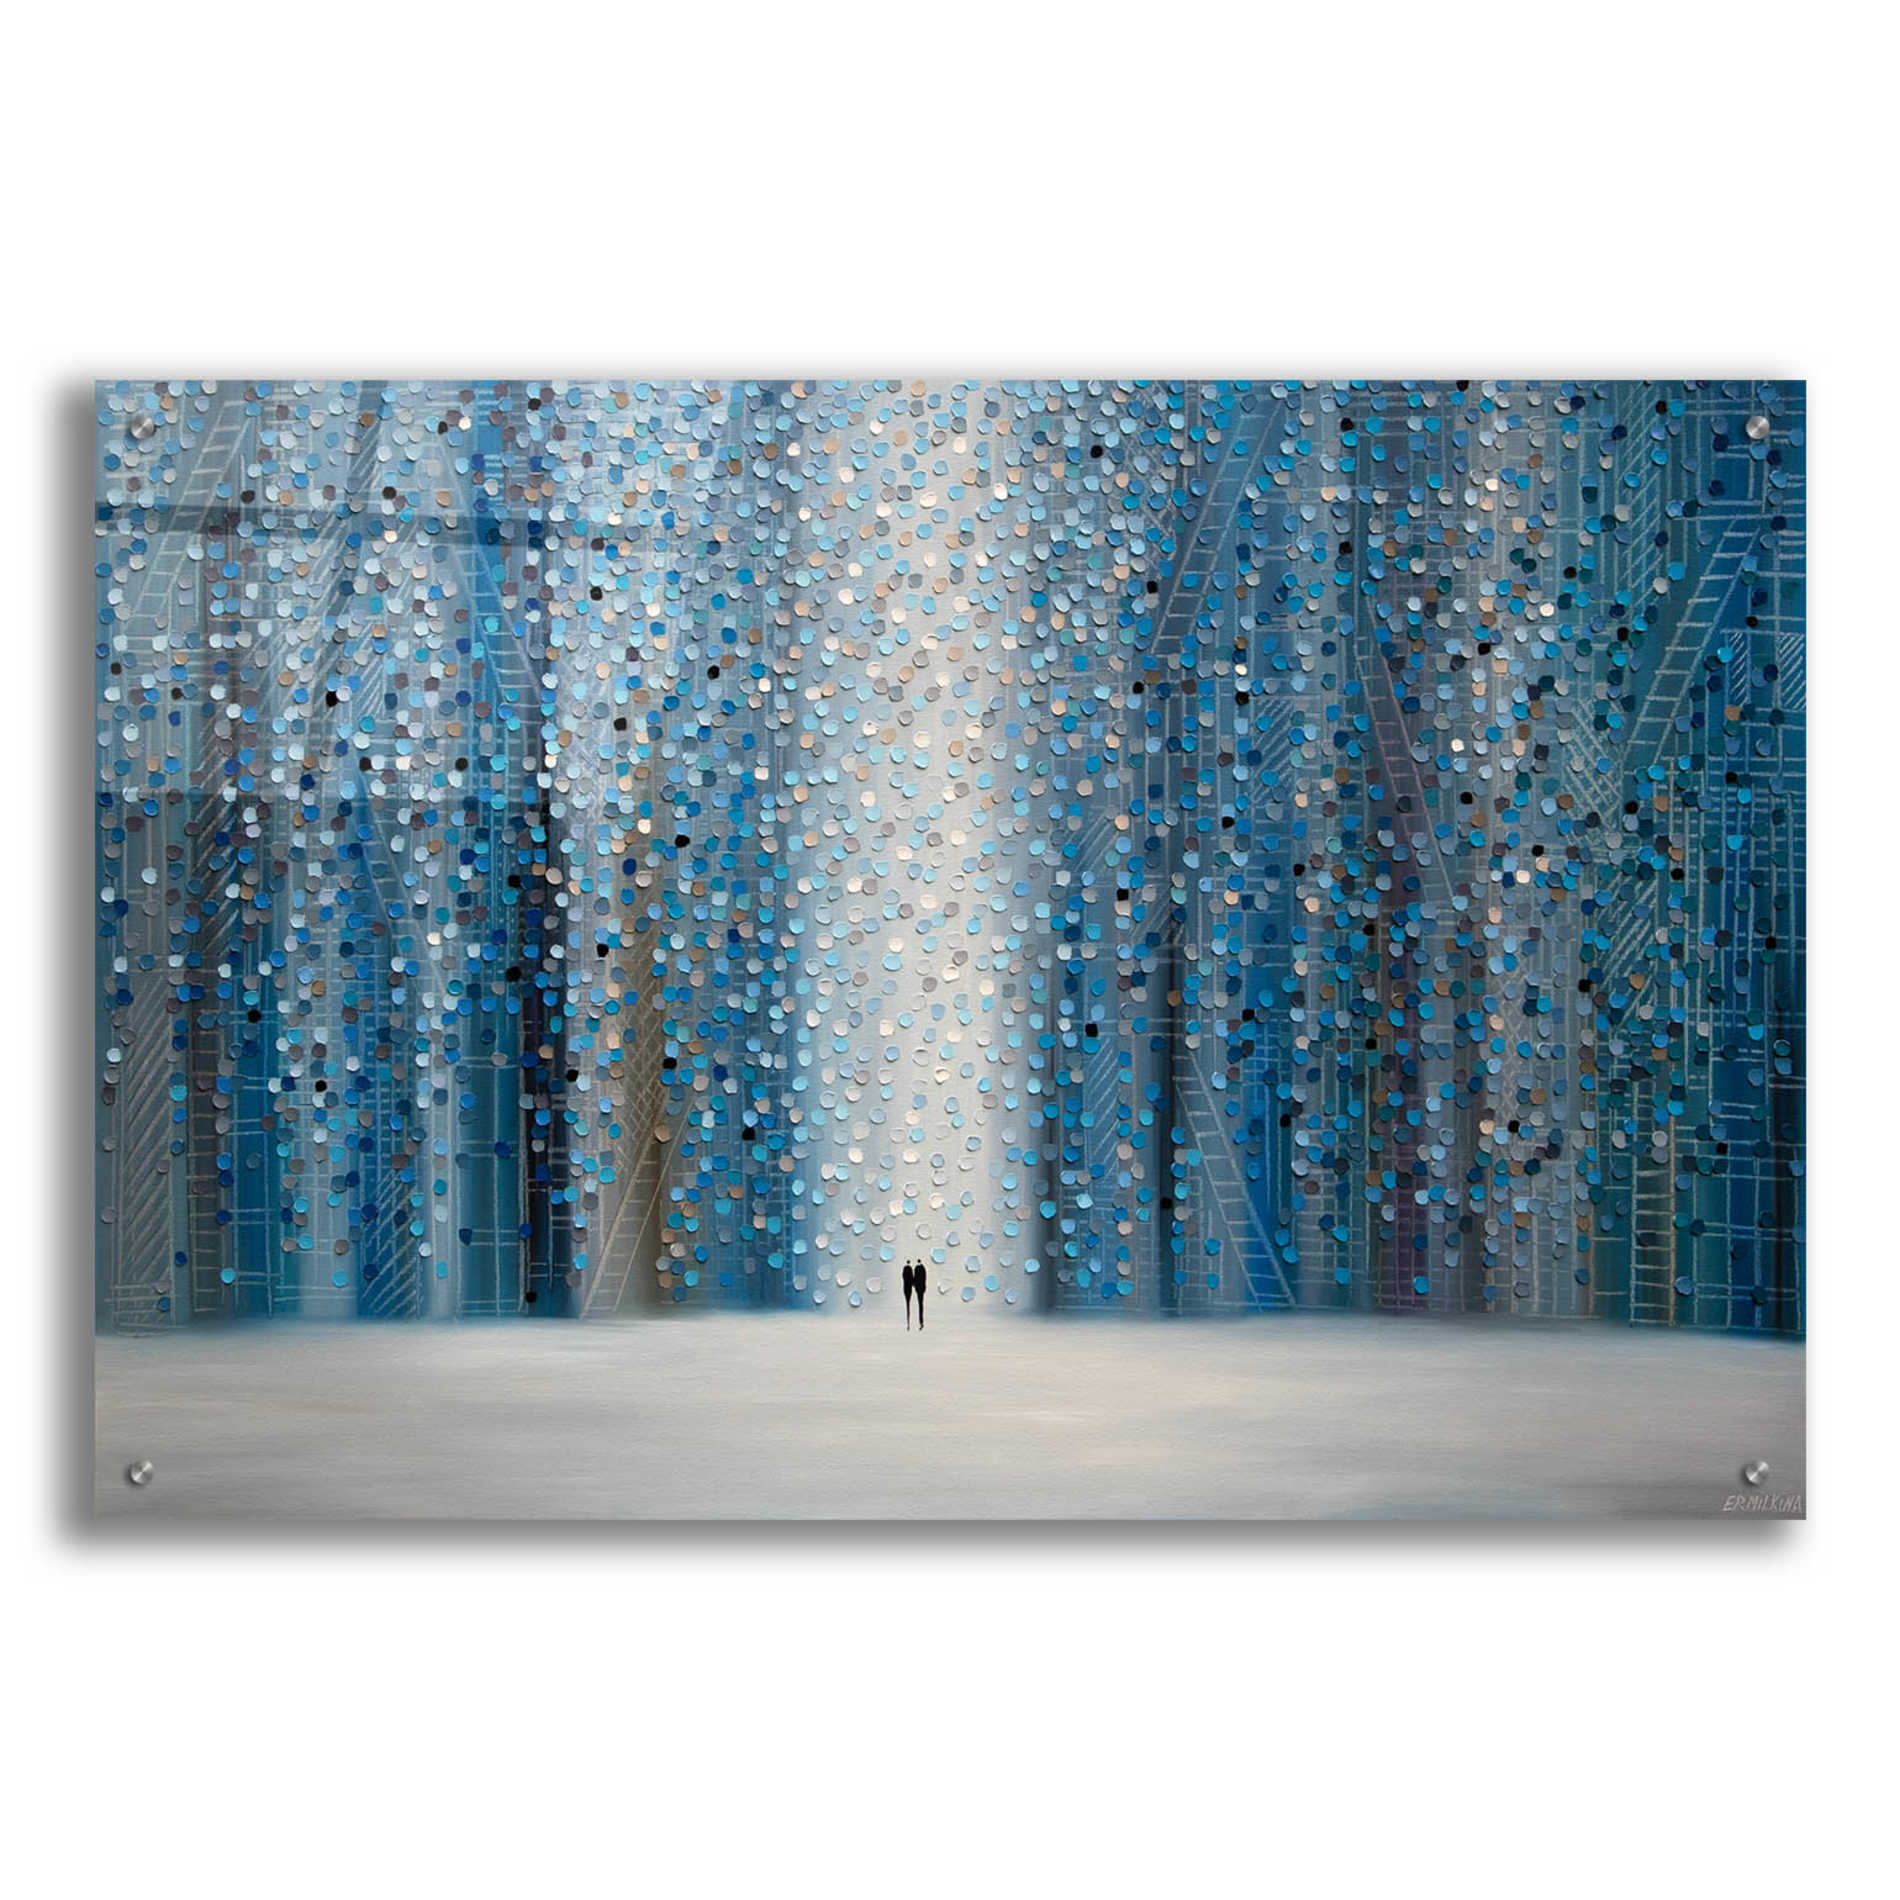 Epic Art 'Sounds Of The Rain' by Ekaterina Ermilkina Acrylic Glass Wall Art,36x24